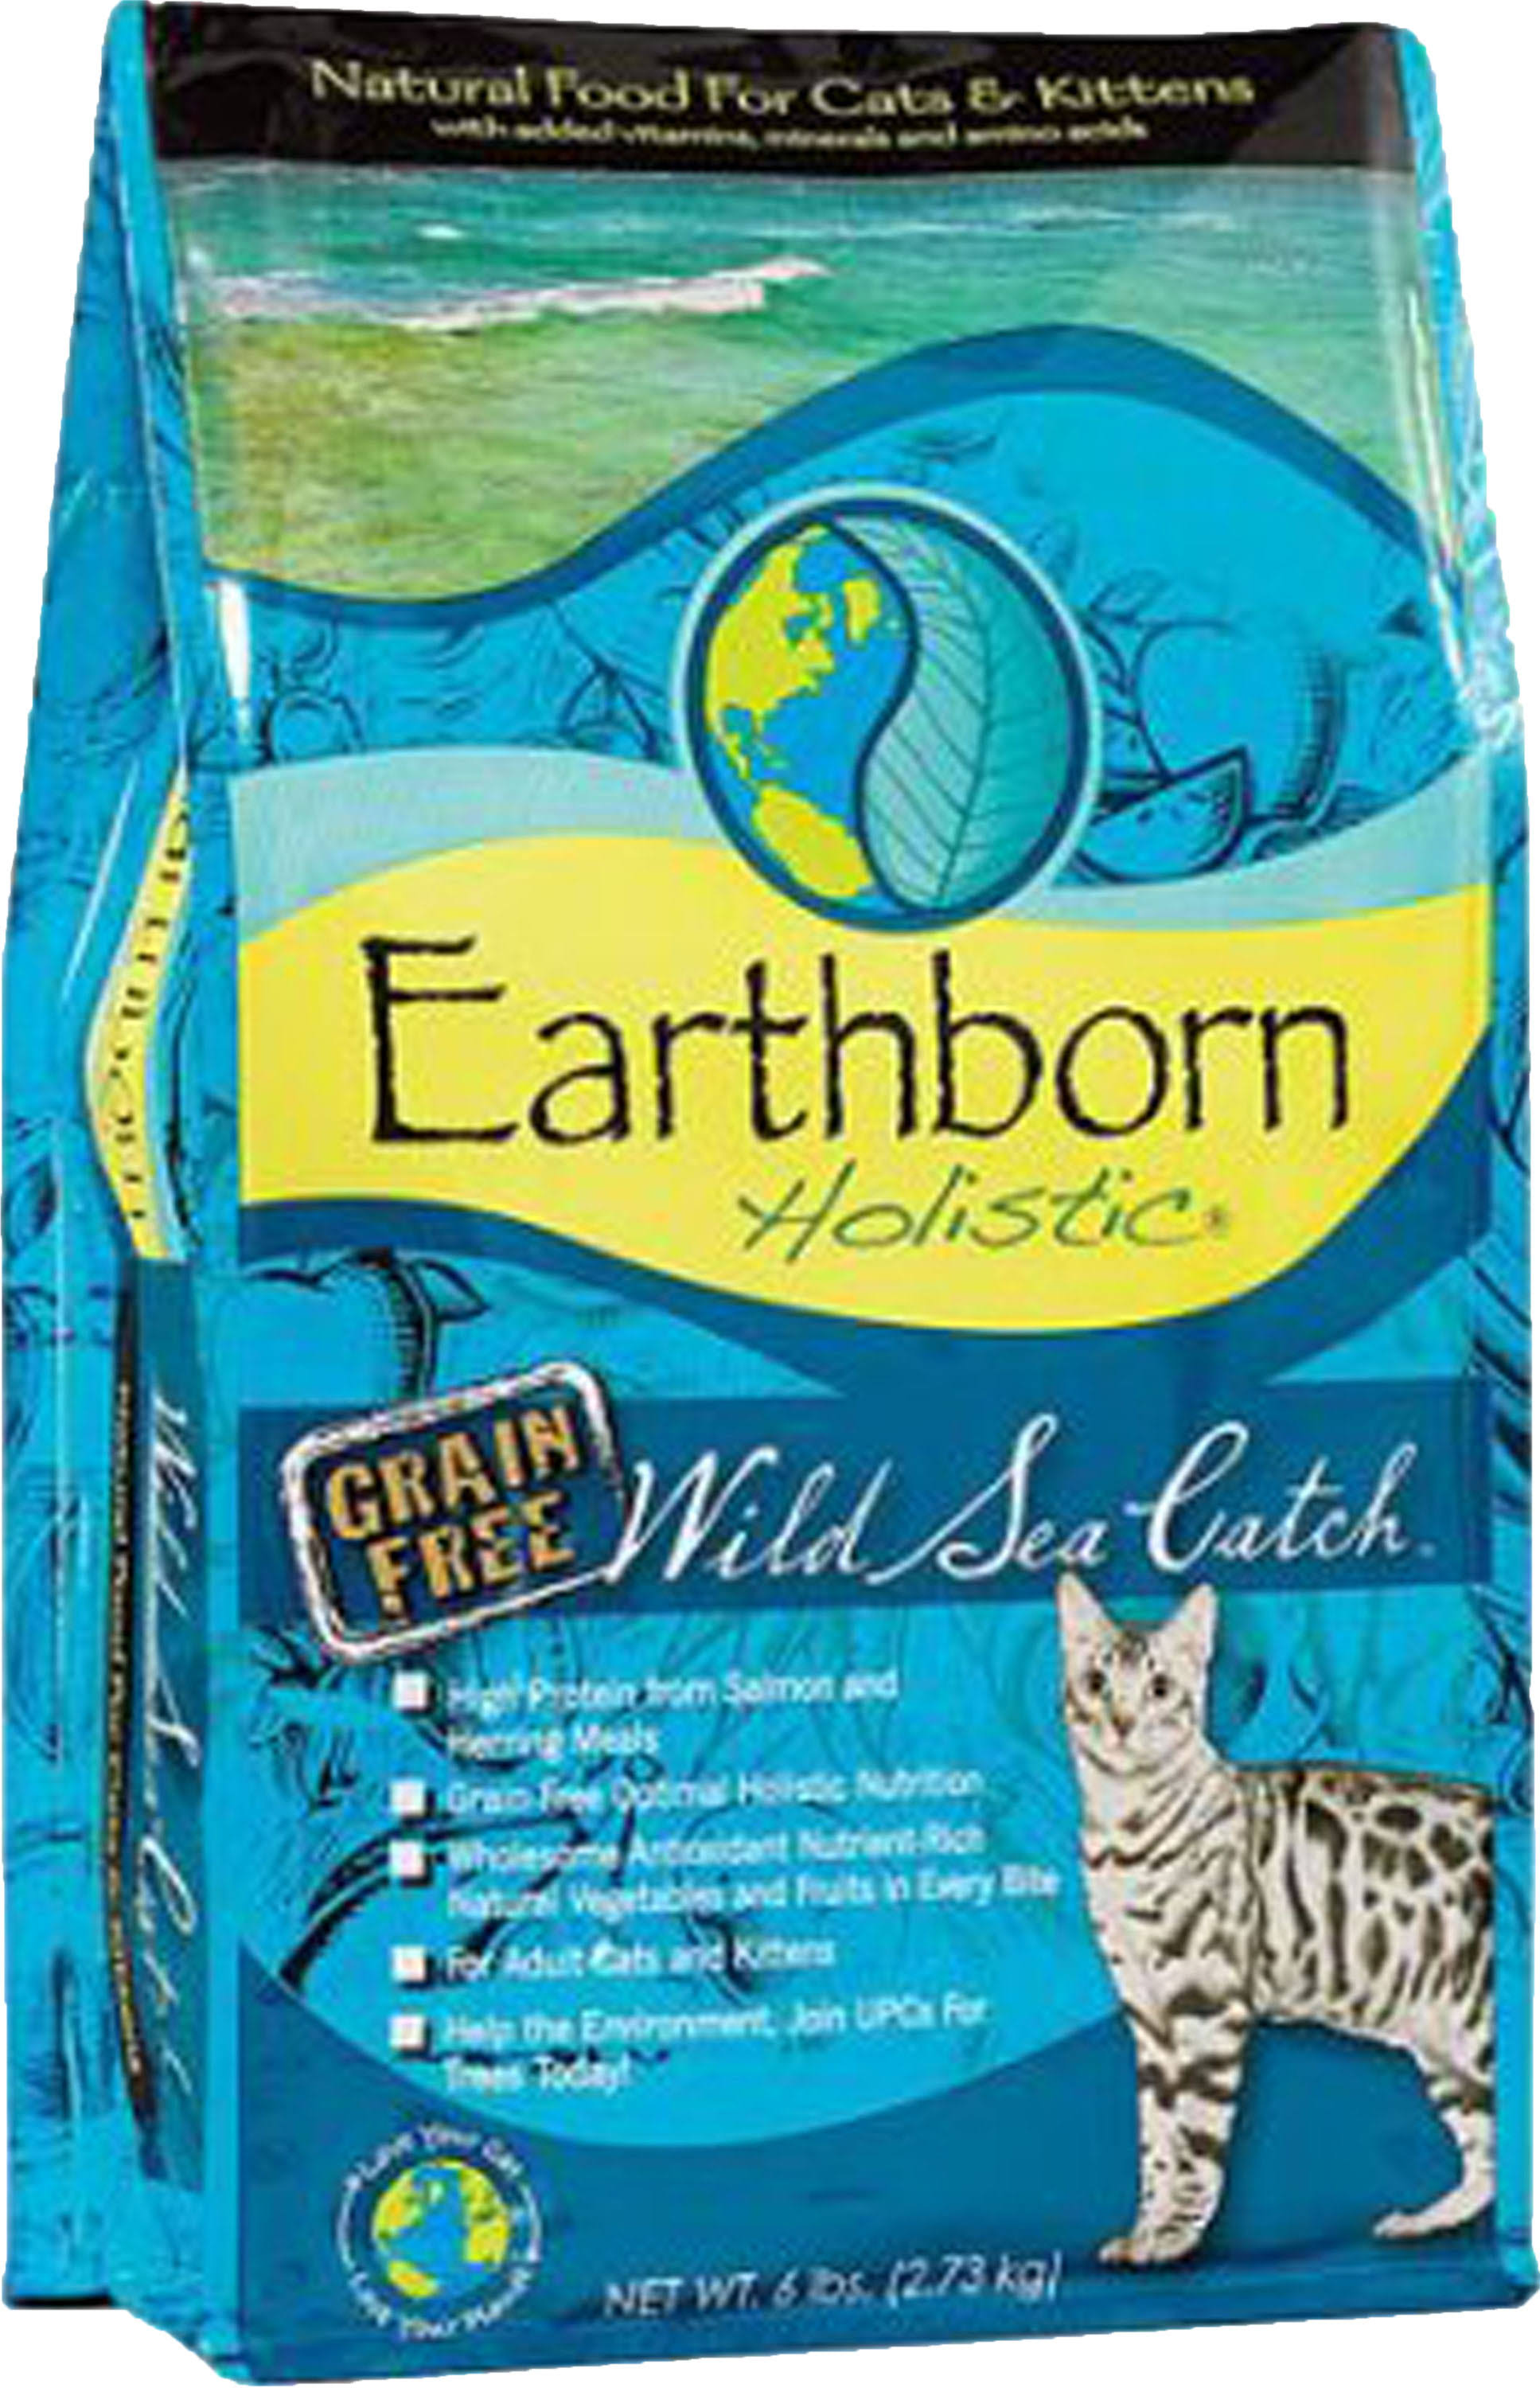 Earthborn Holistic - Wild Sea Catch - Grain Free Fish - Dry Cat Food